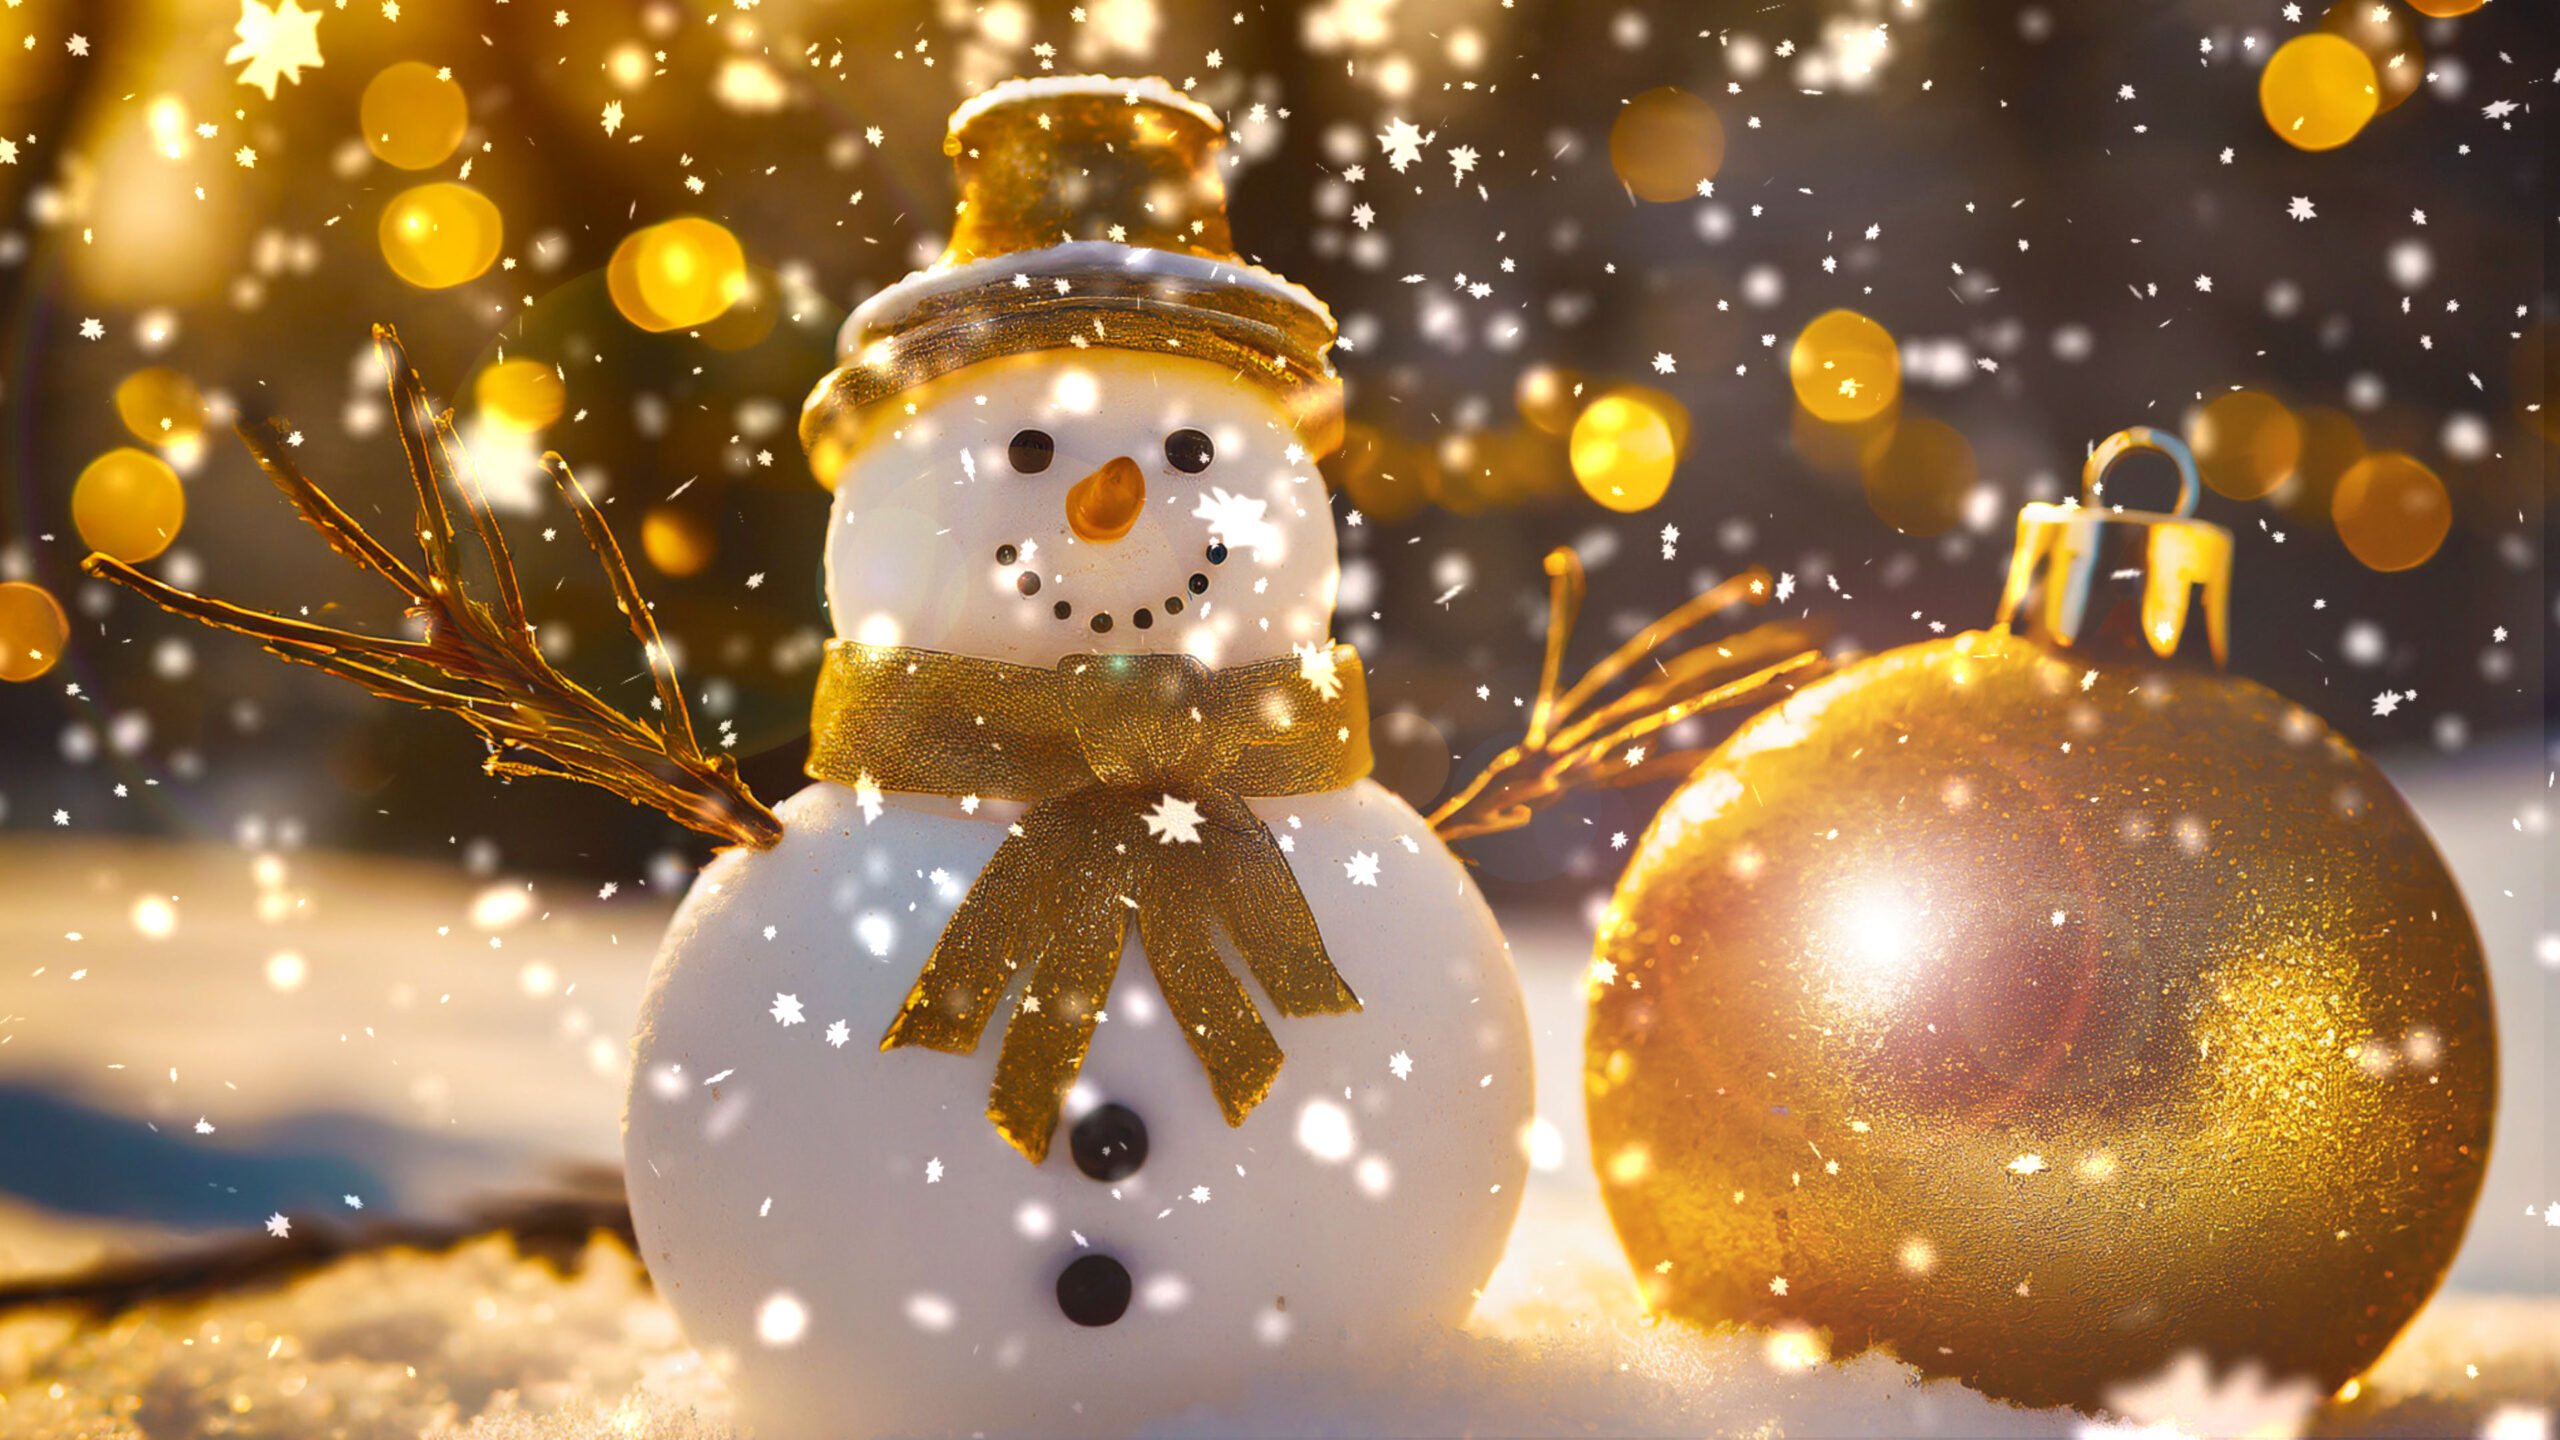 1 Minute ASMR | Heavy Snowfall and a Cute Snowman with Bokeh Light | Crusty Snow SOUND | 4K